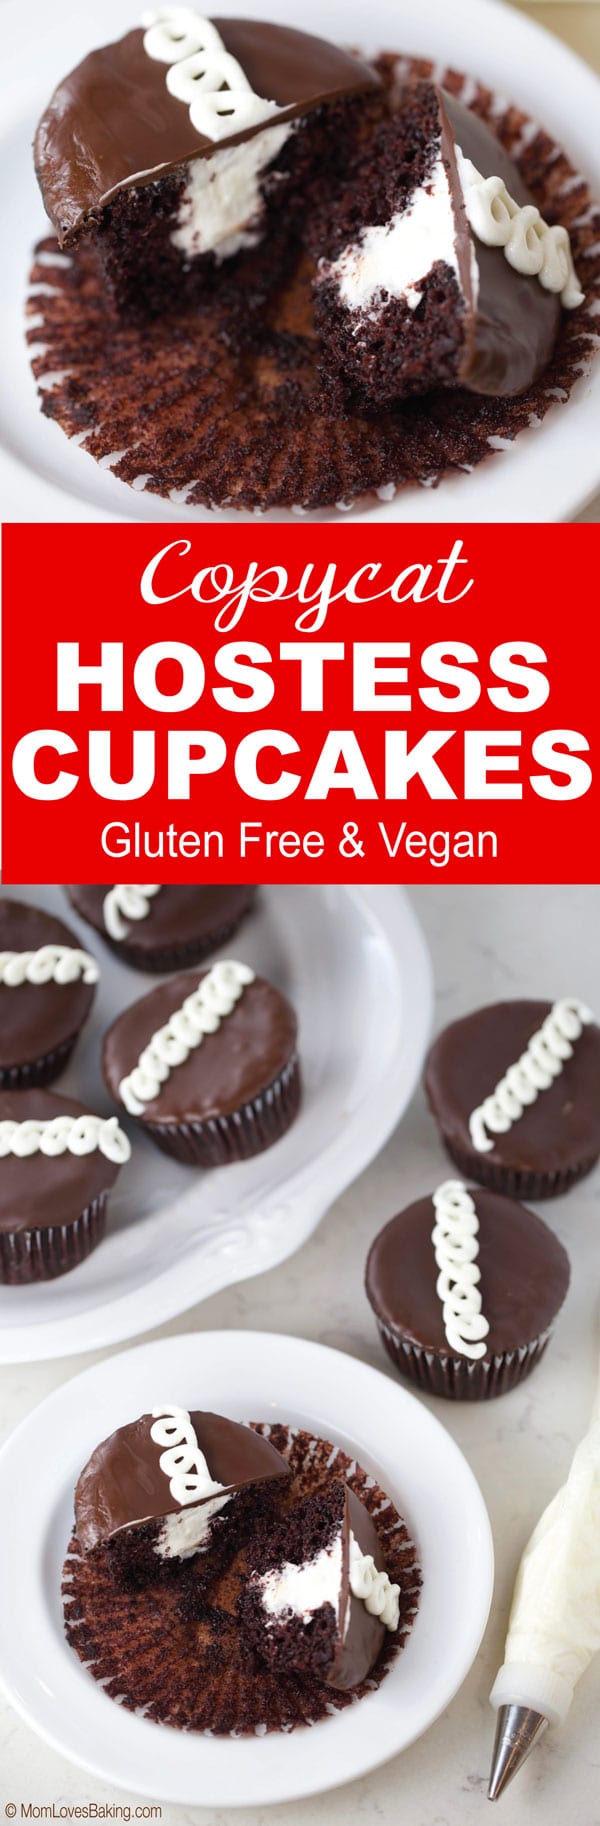 Gluten free vegan hostess cupcakes